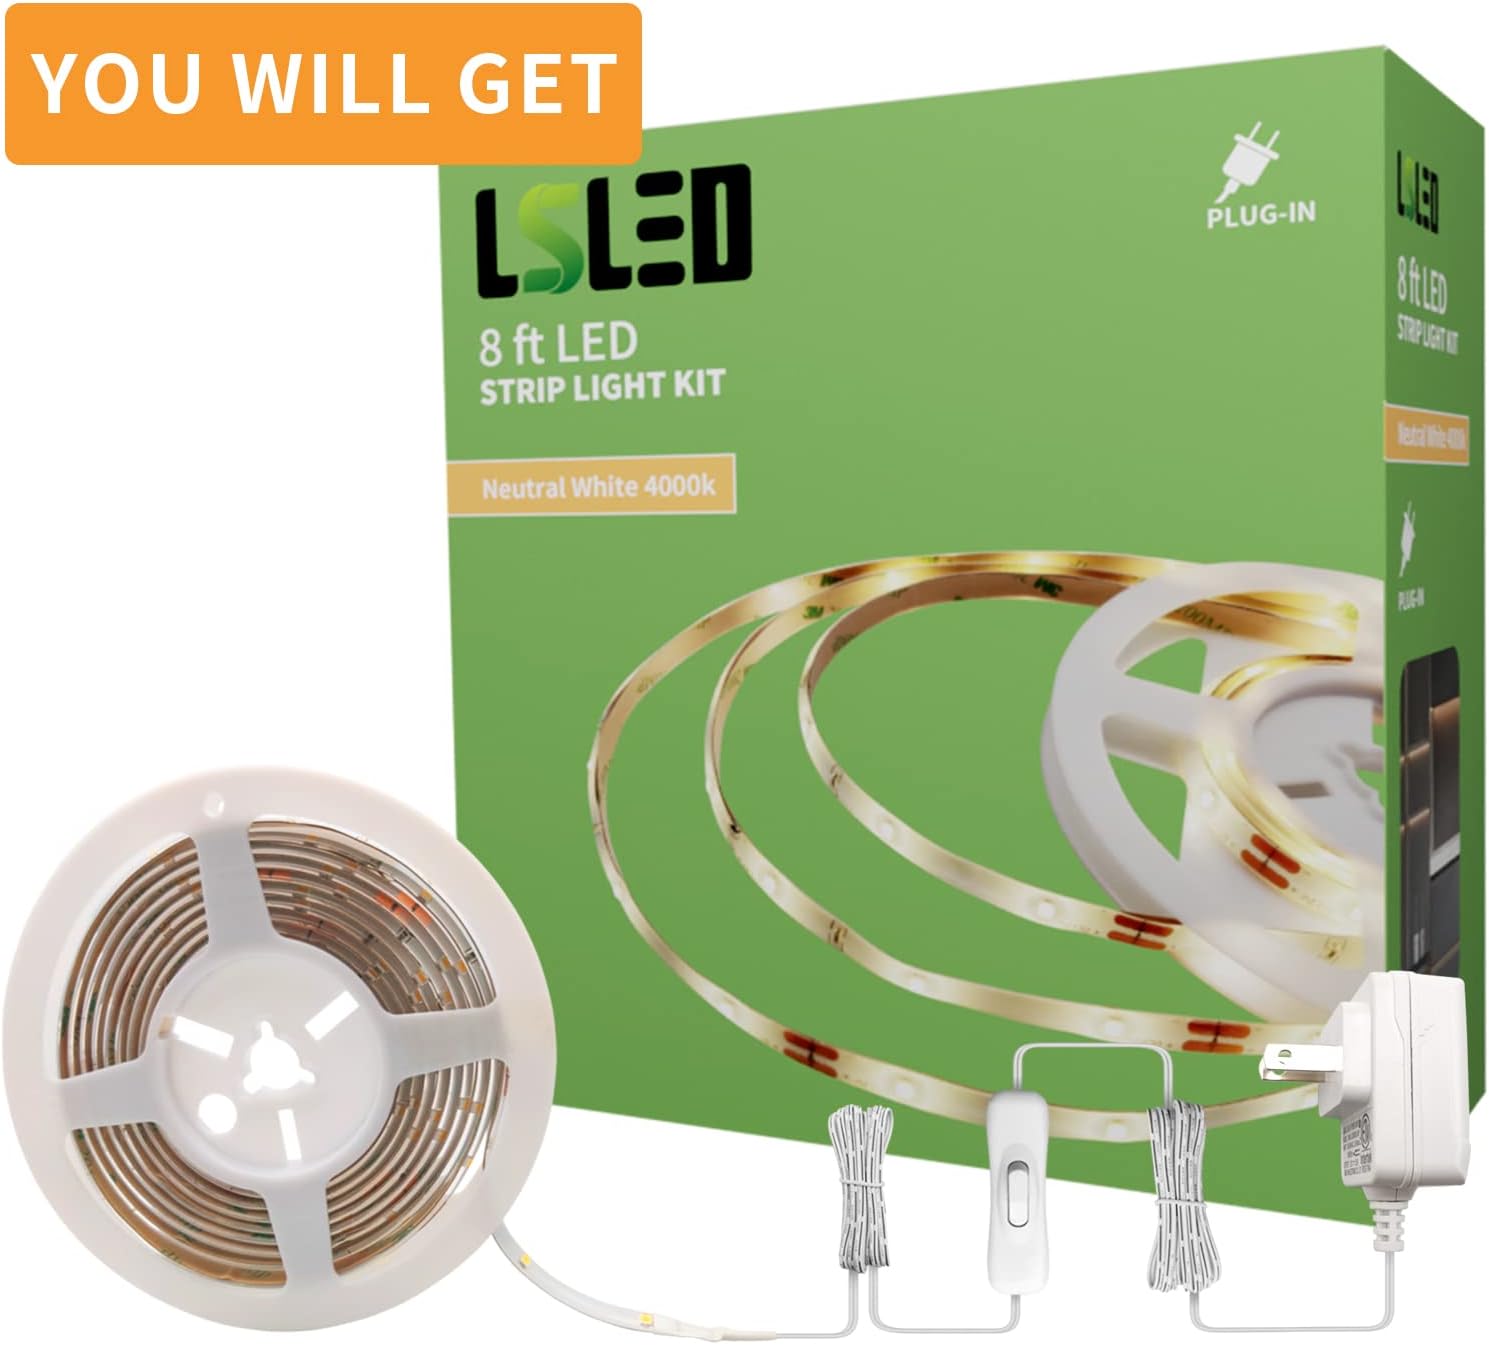 L5L3D LED Strip Lights, 8ft LED Light Strip, 12V 4000K Neutral White Tape Light with PU Coating, LED Lights for Bedroom, Kitchen, Mirror, Home Decor, ETL Listed